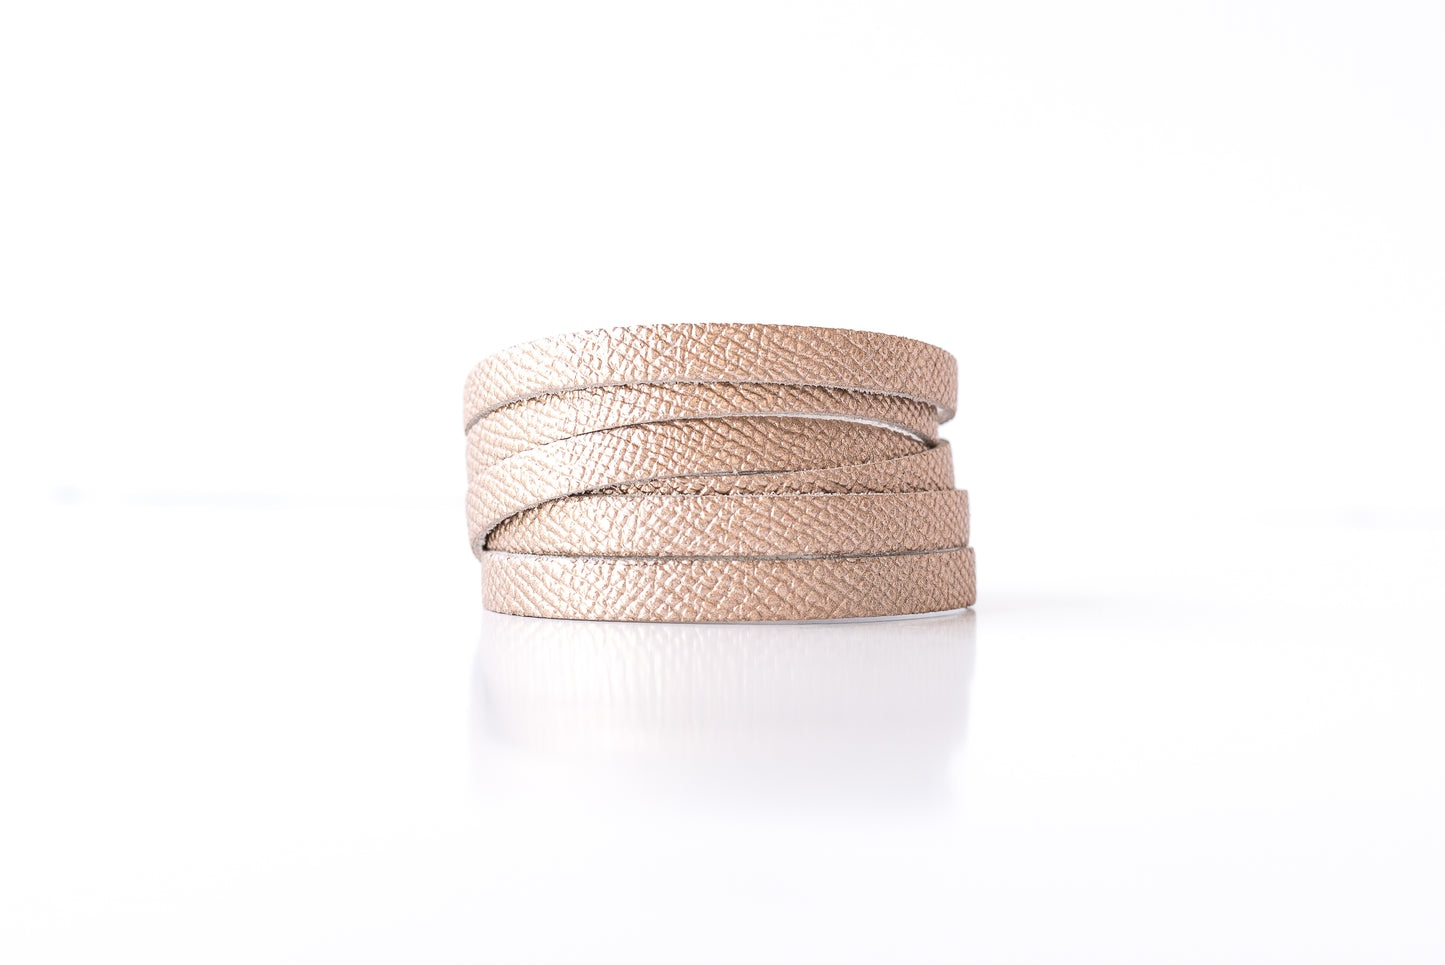 Leather Bracelet / Skinny Sliced Wrap Cuff / White Gold